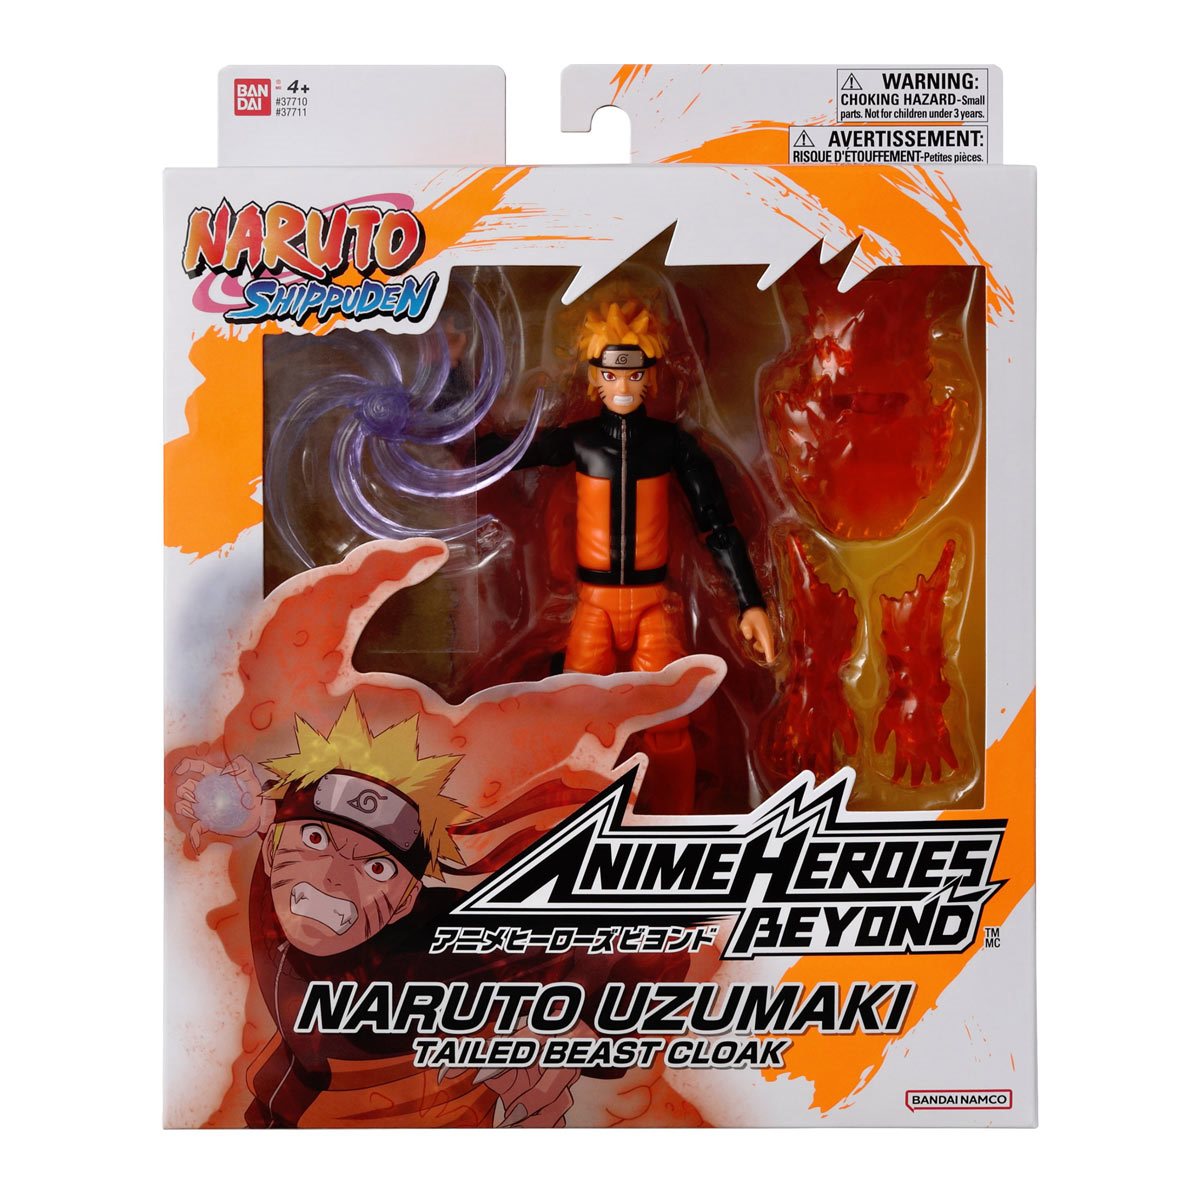 Naruto Anime Heroes Naruto Final Battle Action Figure